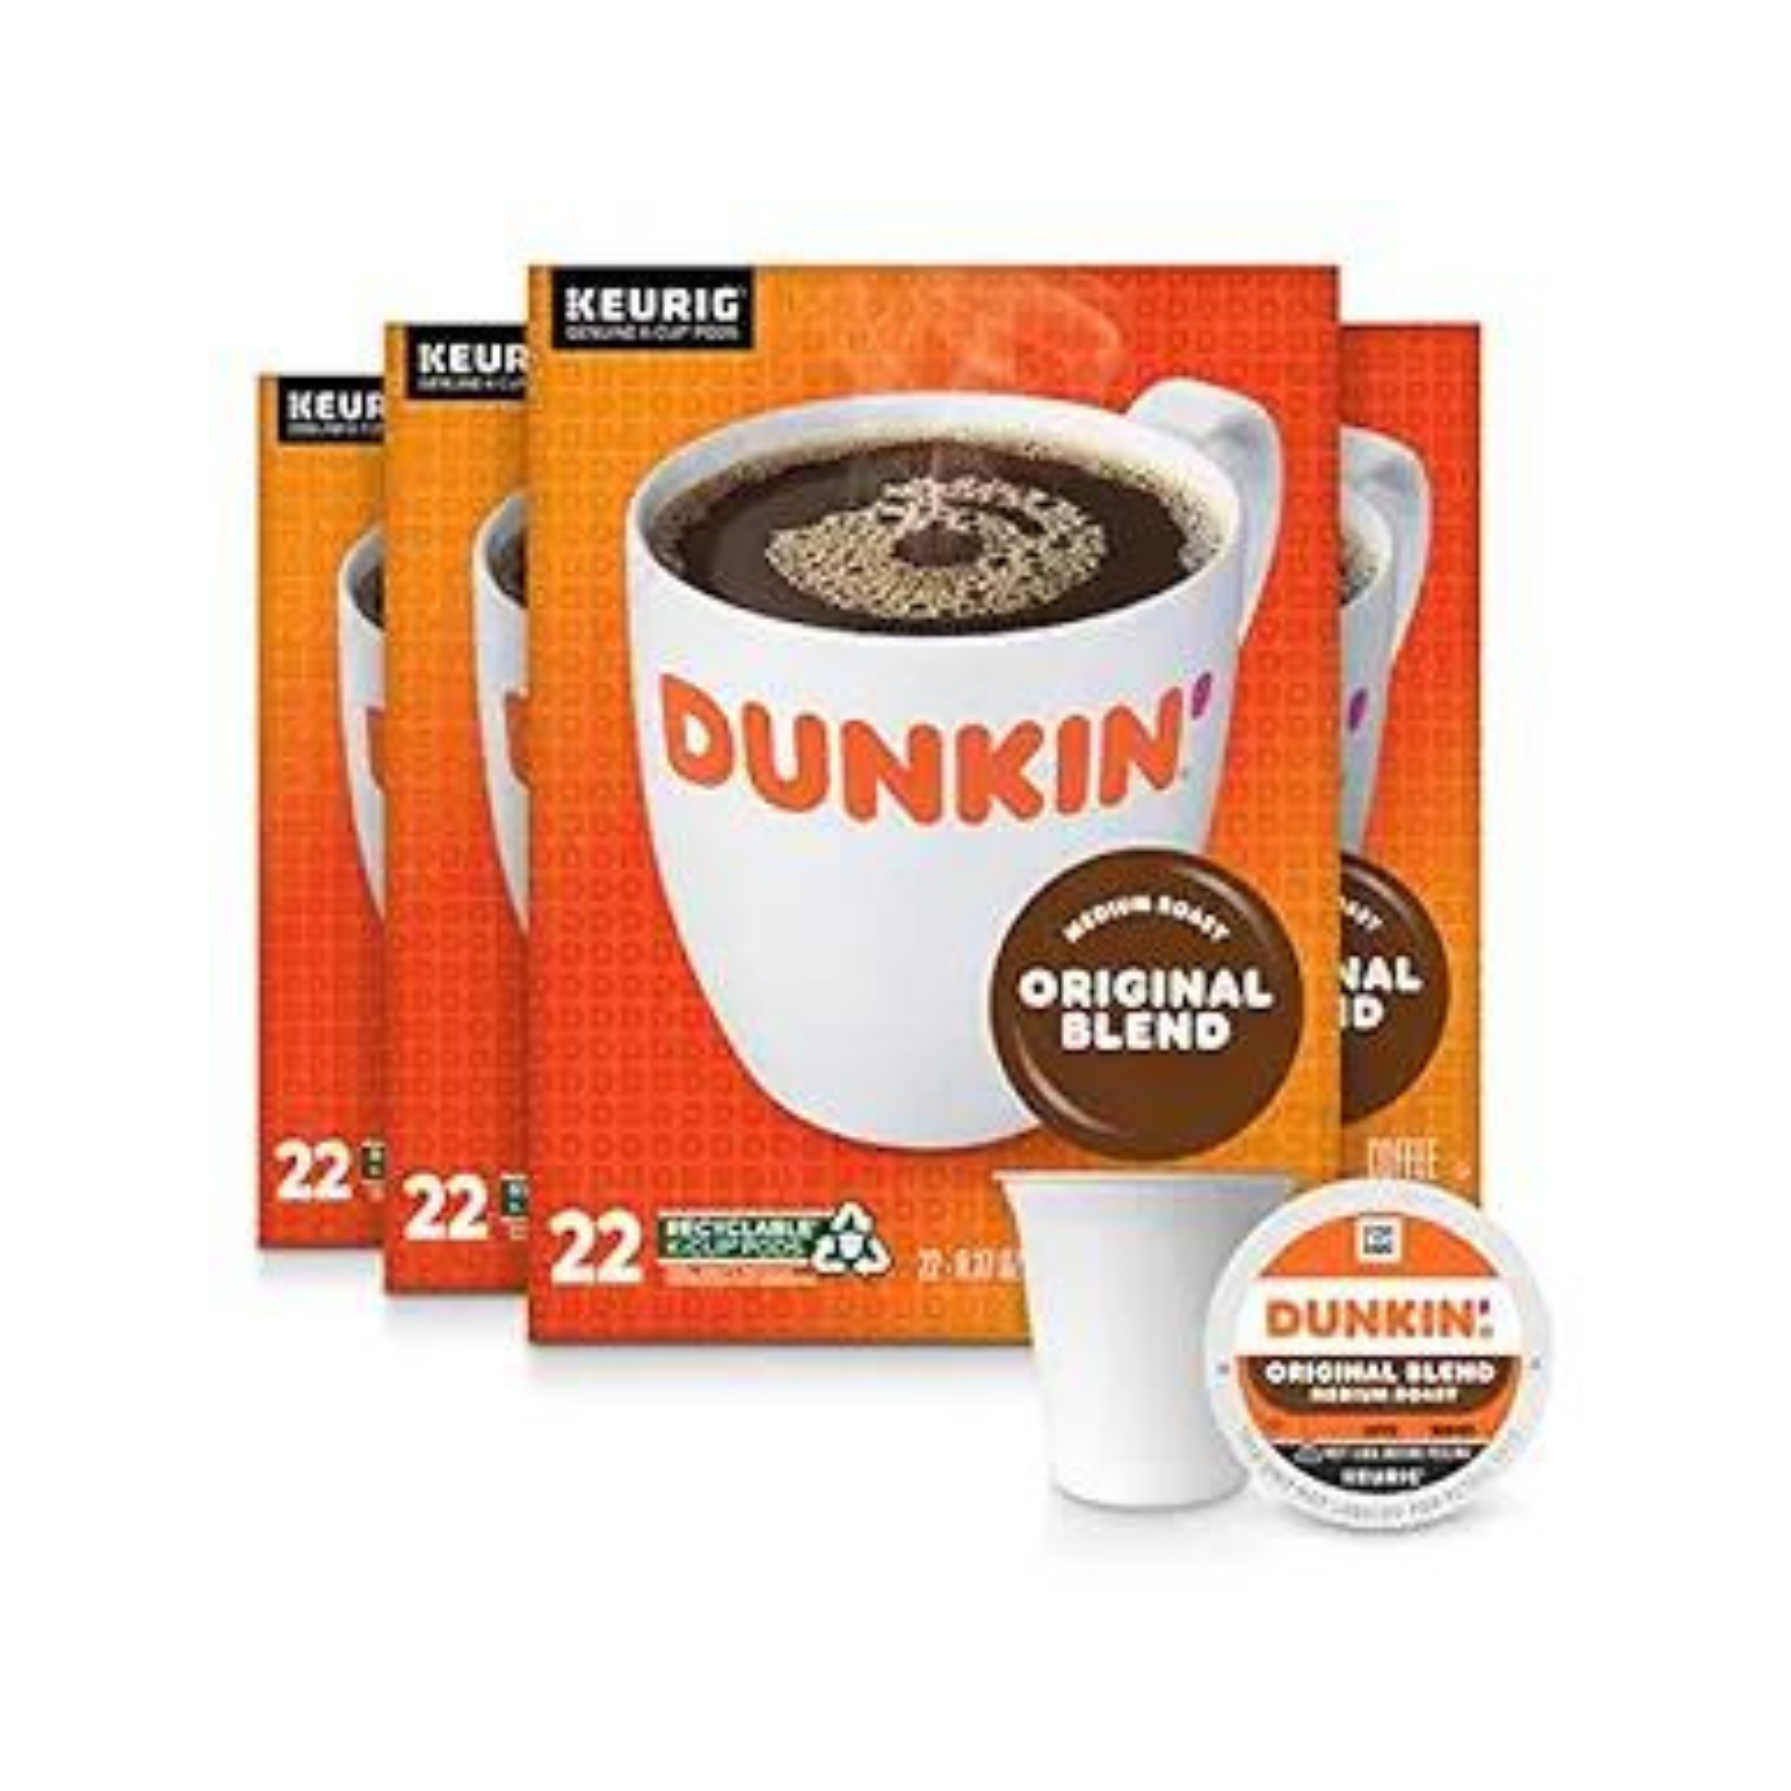 88-Count Dunkin’ Original Blend Medium Roast Keurig K-Cup Coffee Pods